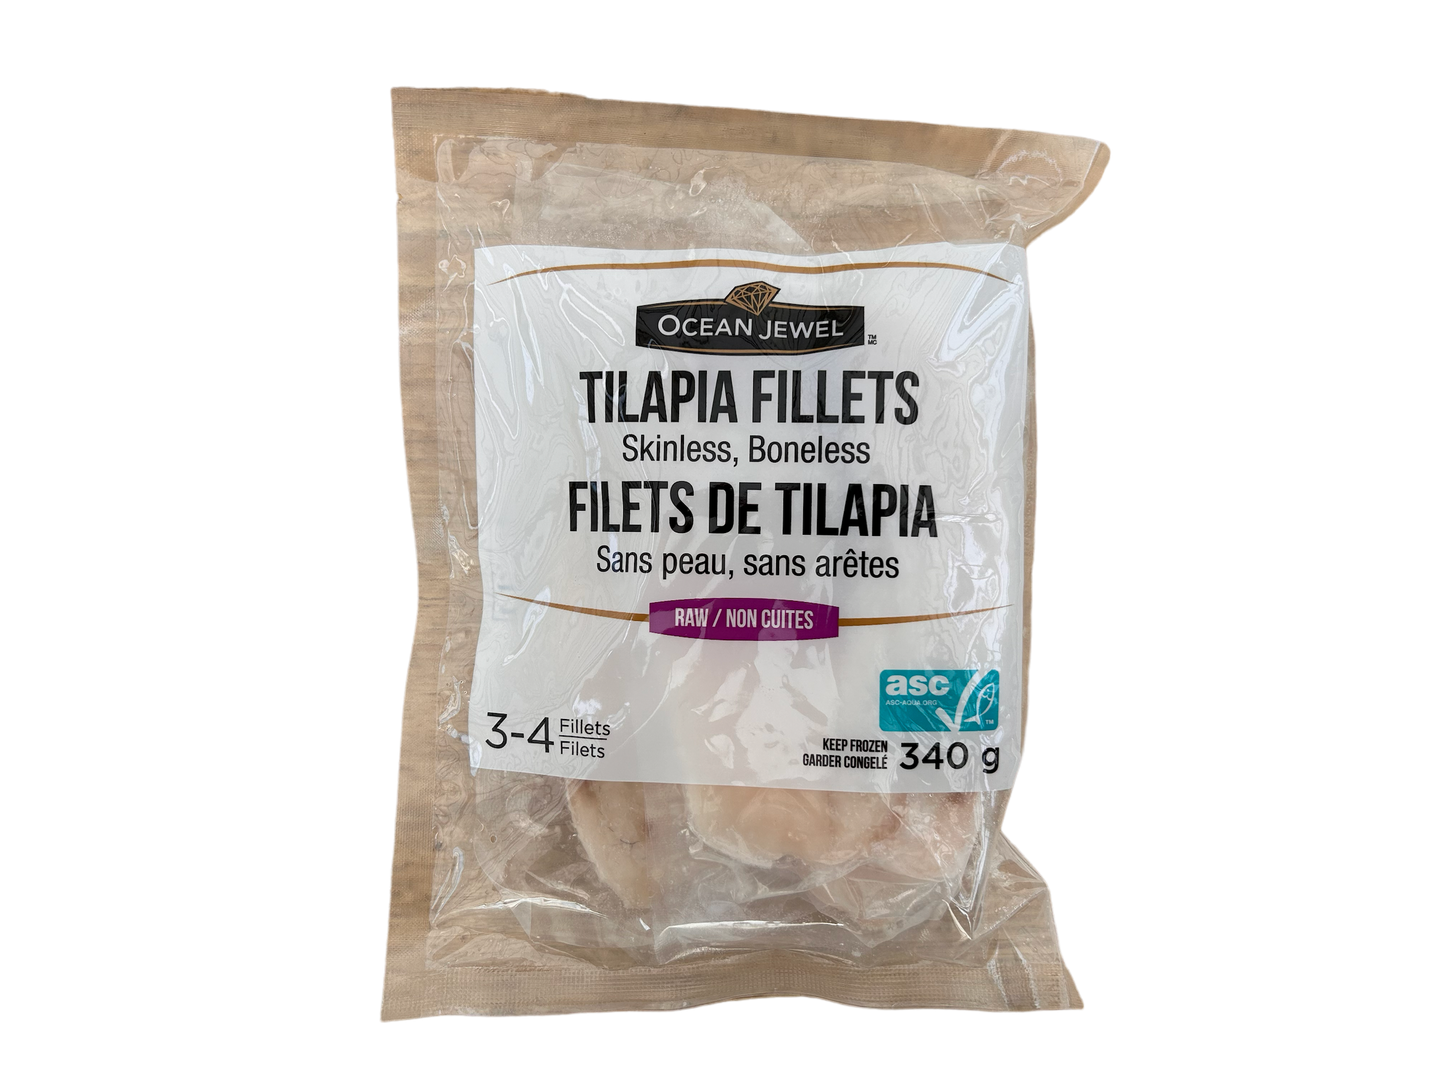 Tilapia Fillets - skinless